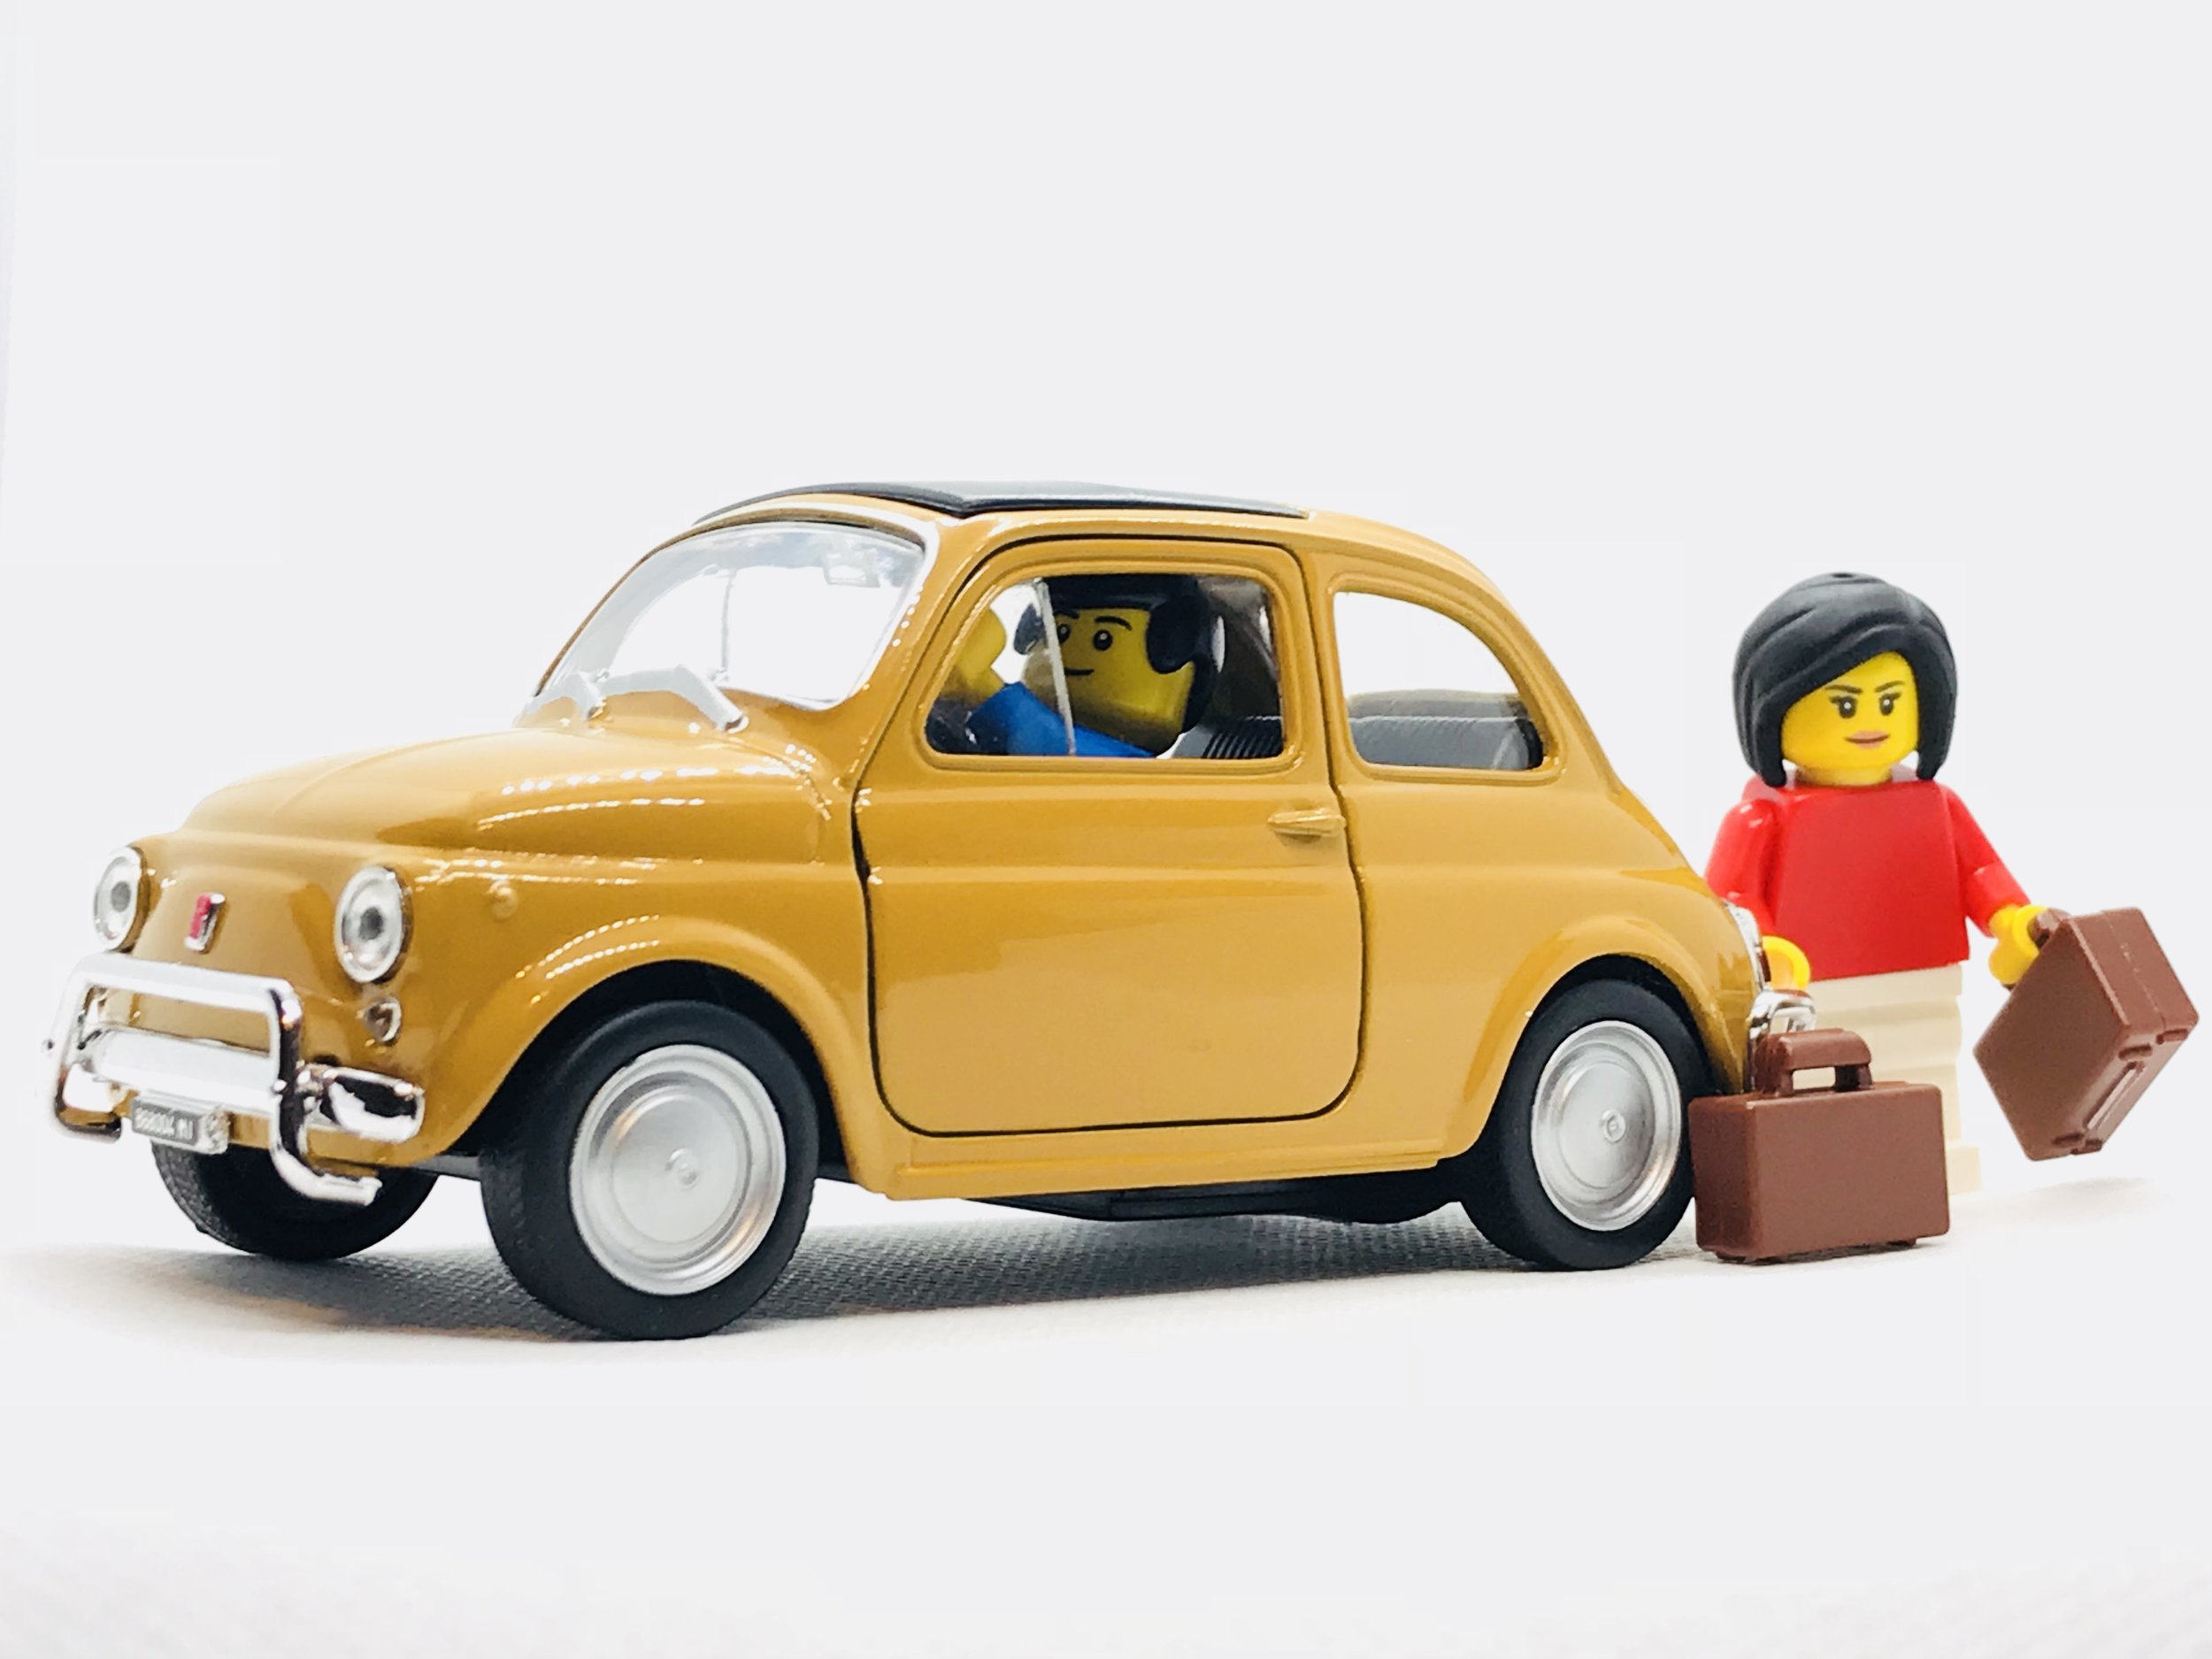 Lego couple and orange car